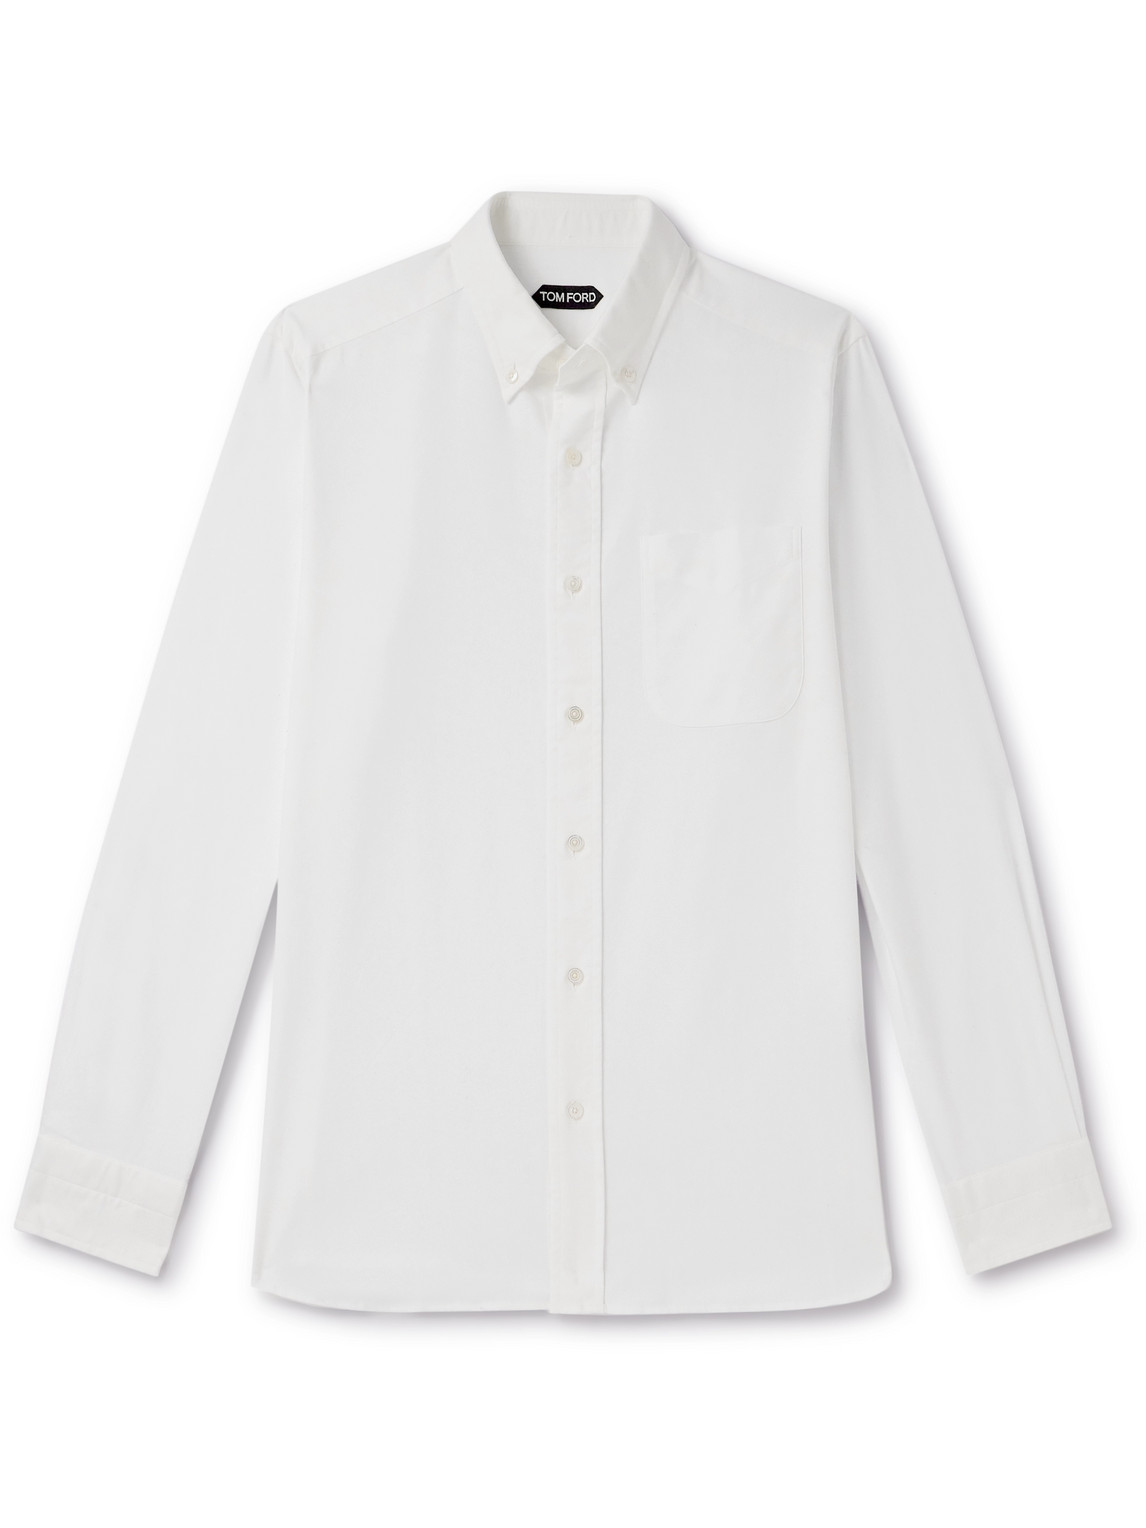 TOM FORD - Button-Down Collar Cotton Oxford Shirt - Men - White - EU 38 von TOM FORD